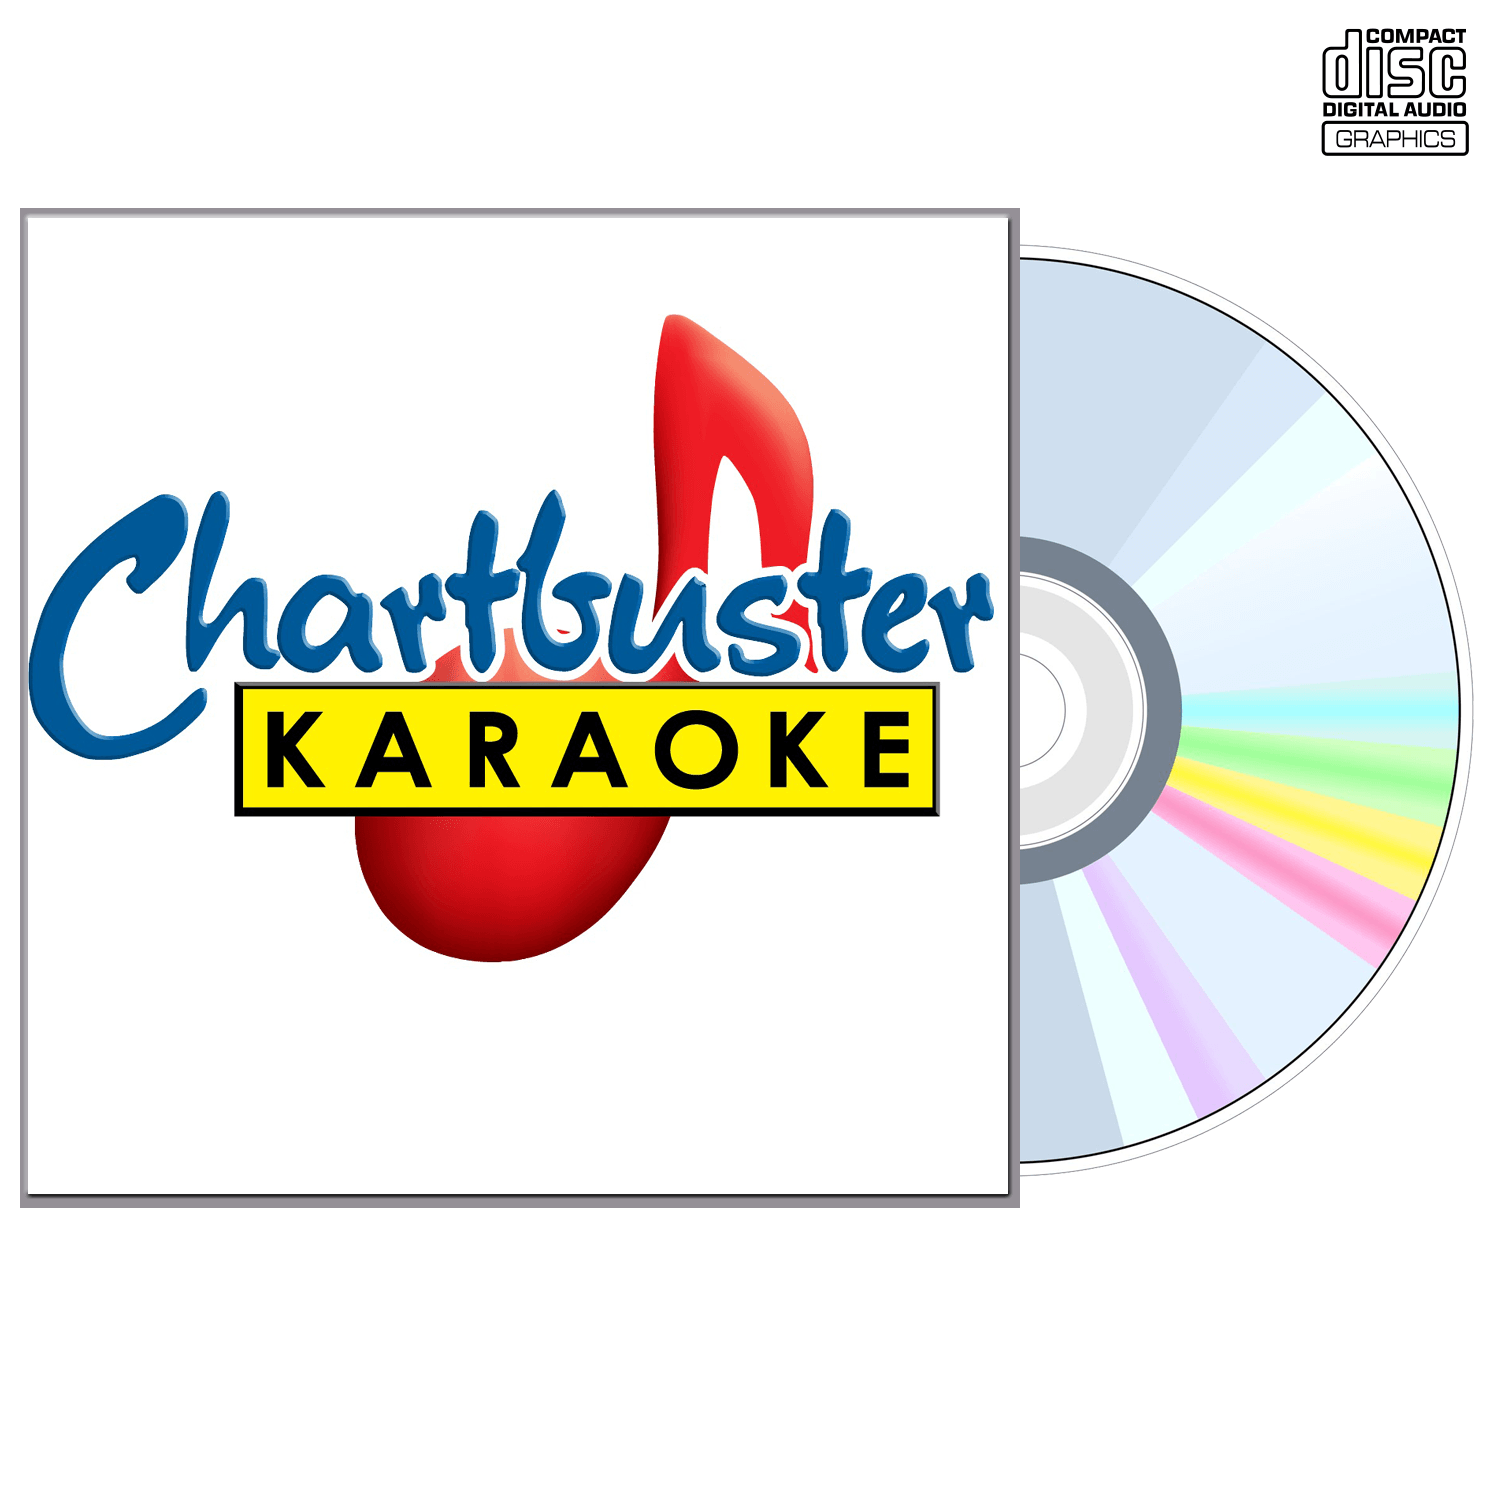 70's Collection Vol 16 - CD+G - Chartbuster Karaoke - Karaoke Home Entertainment